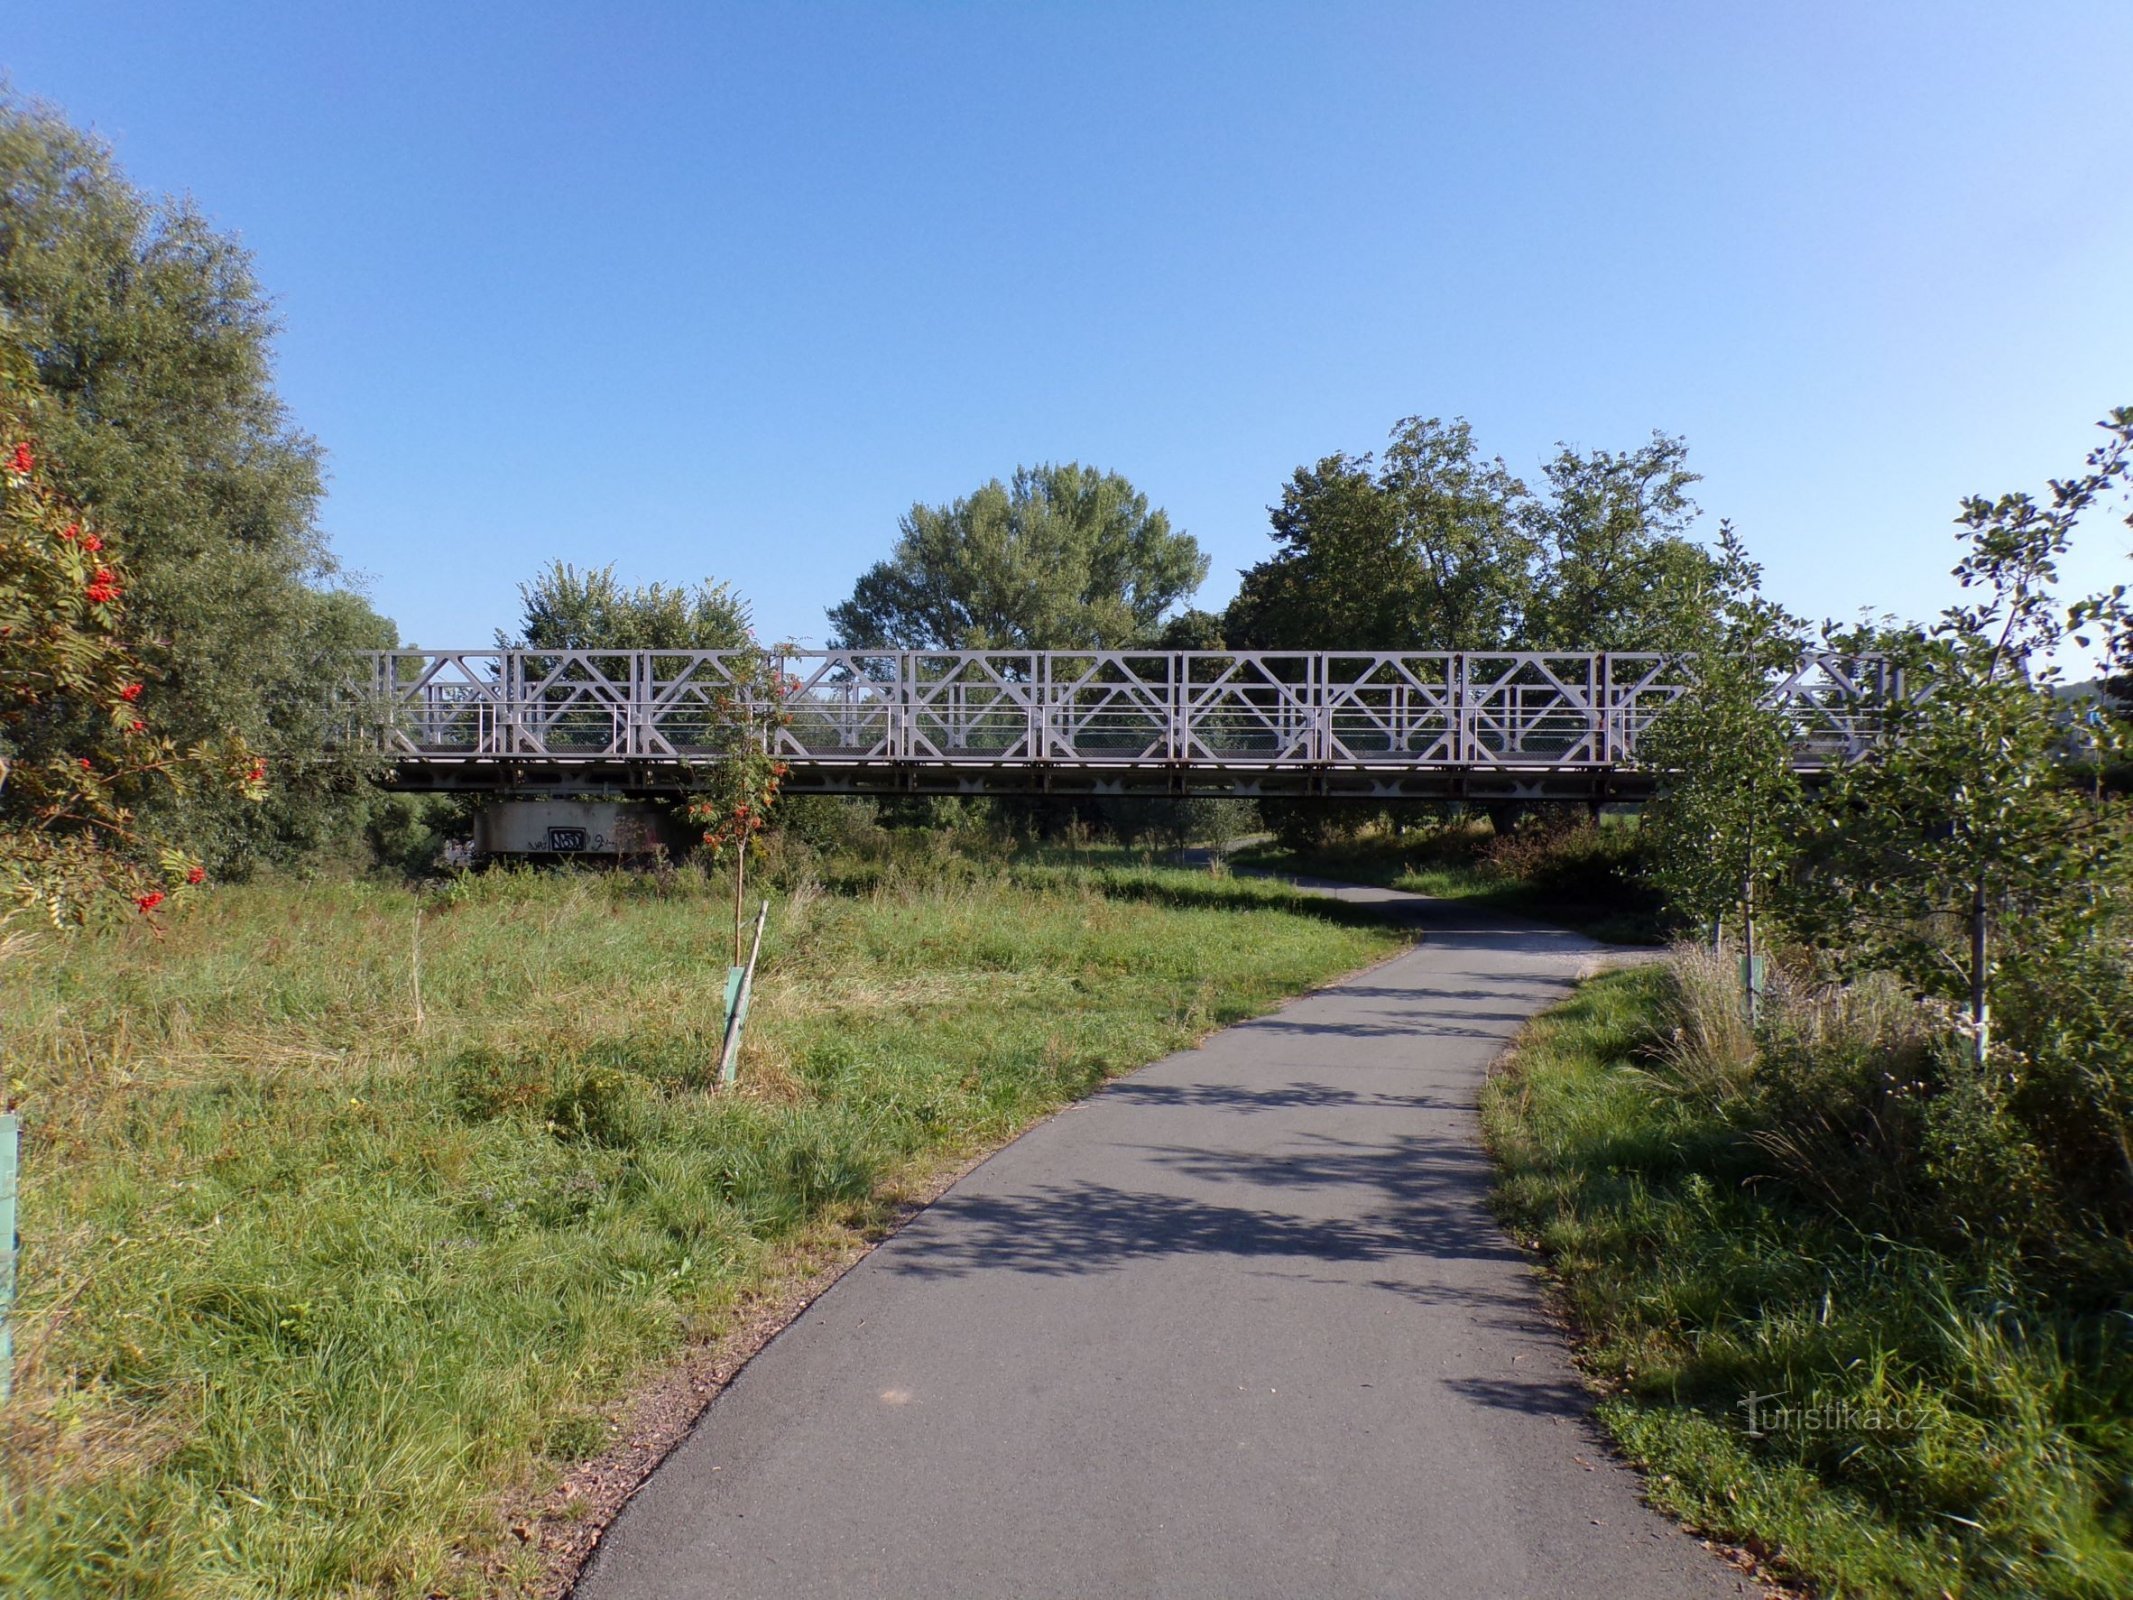 Eiserne Brücke über die Elbe (Vysoká nad Labem/Opatovice nad Labem, 3.9.2021)